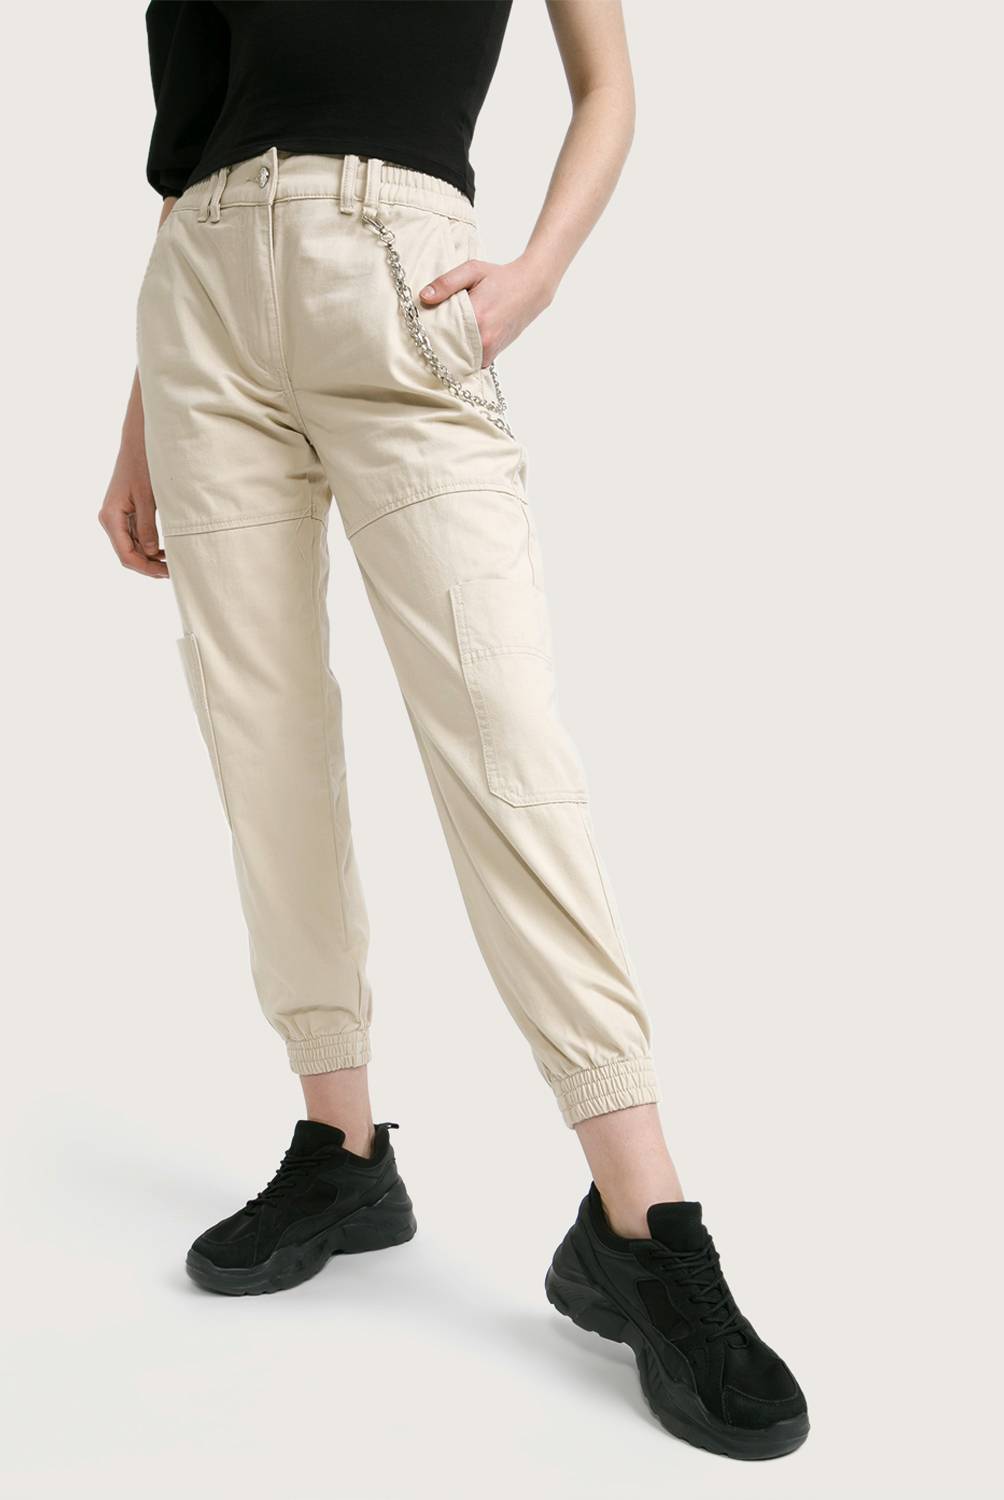 SYBILLA - Jeans de Algodón Jogger Mujer